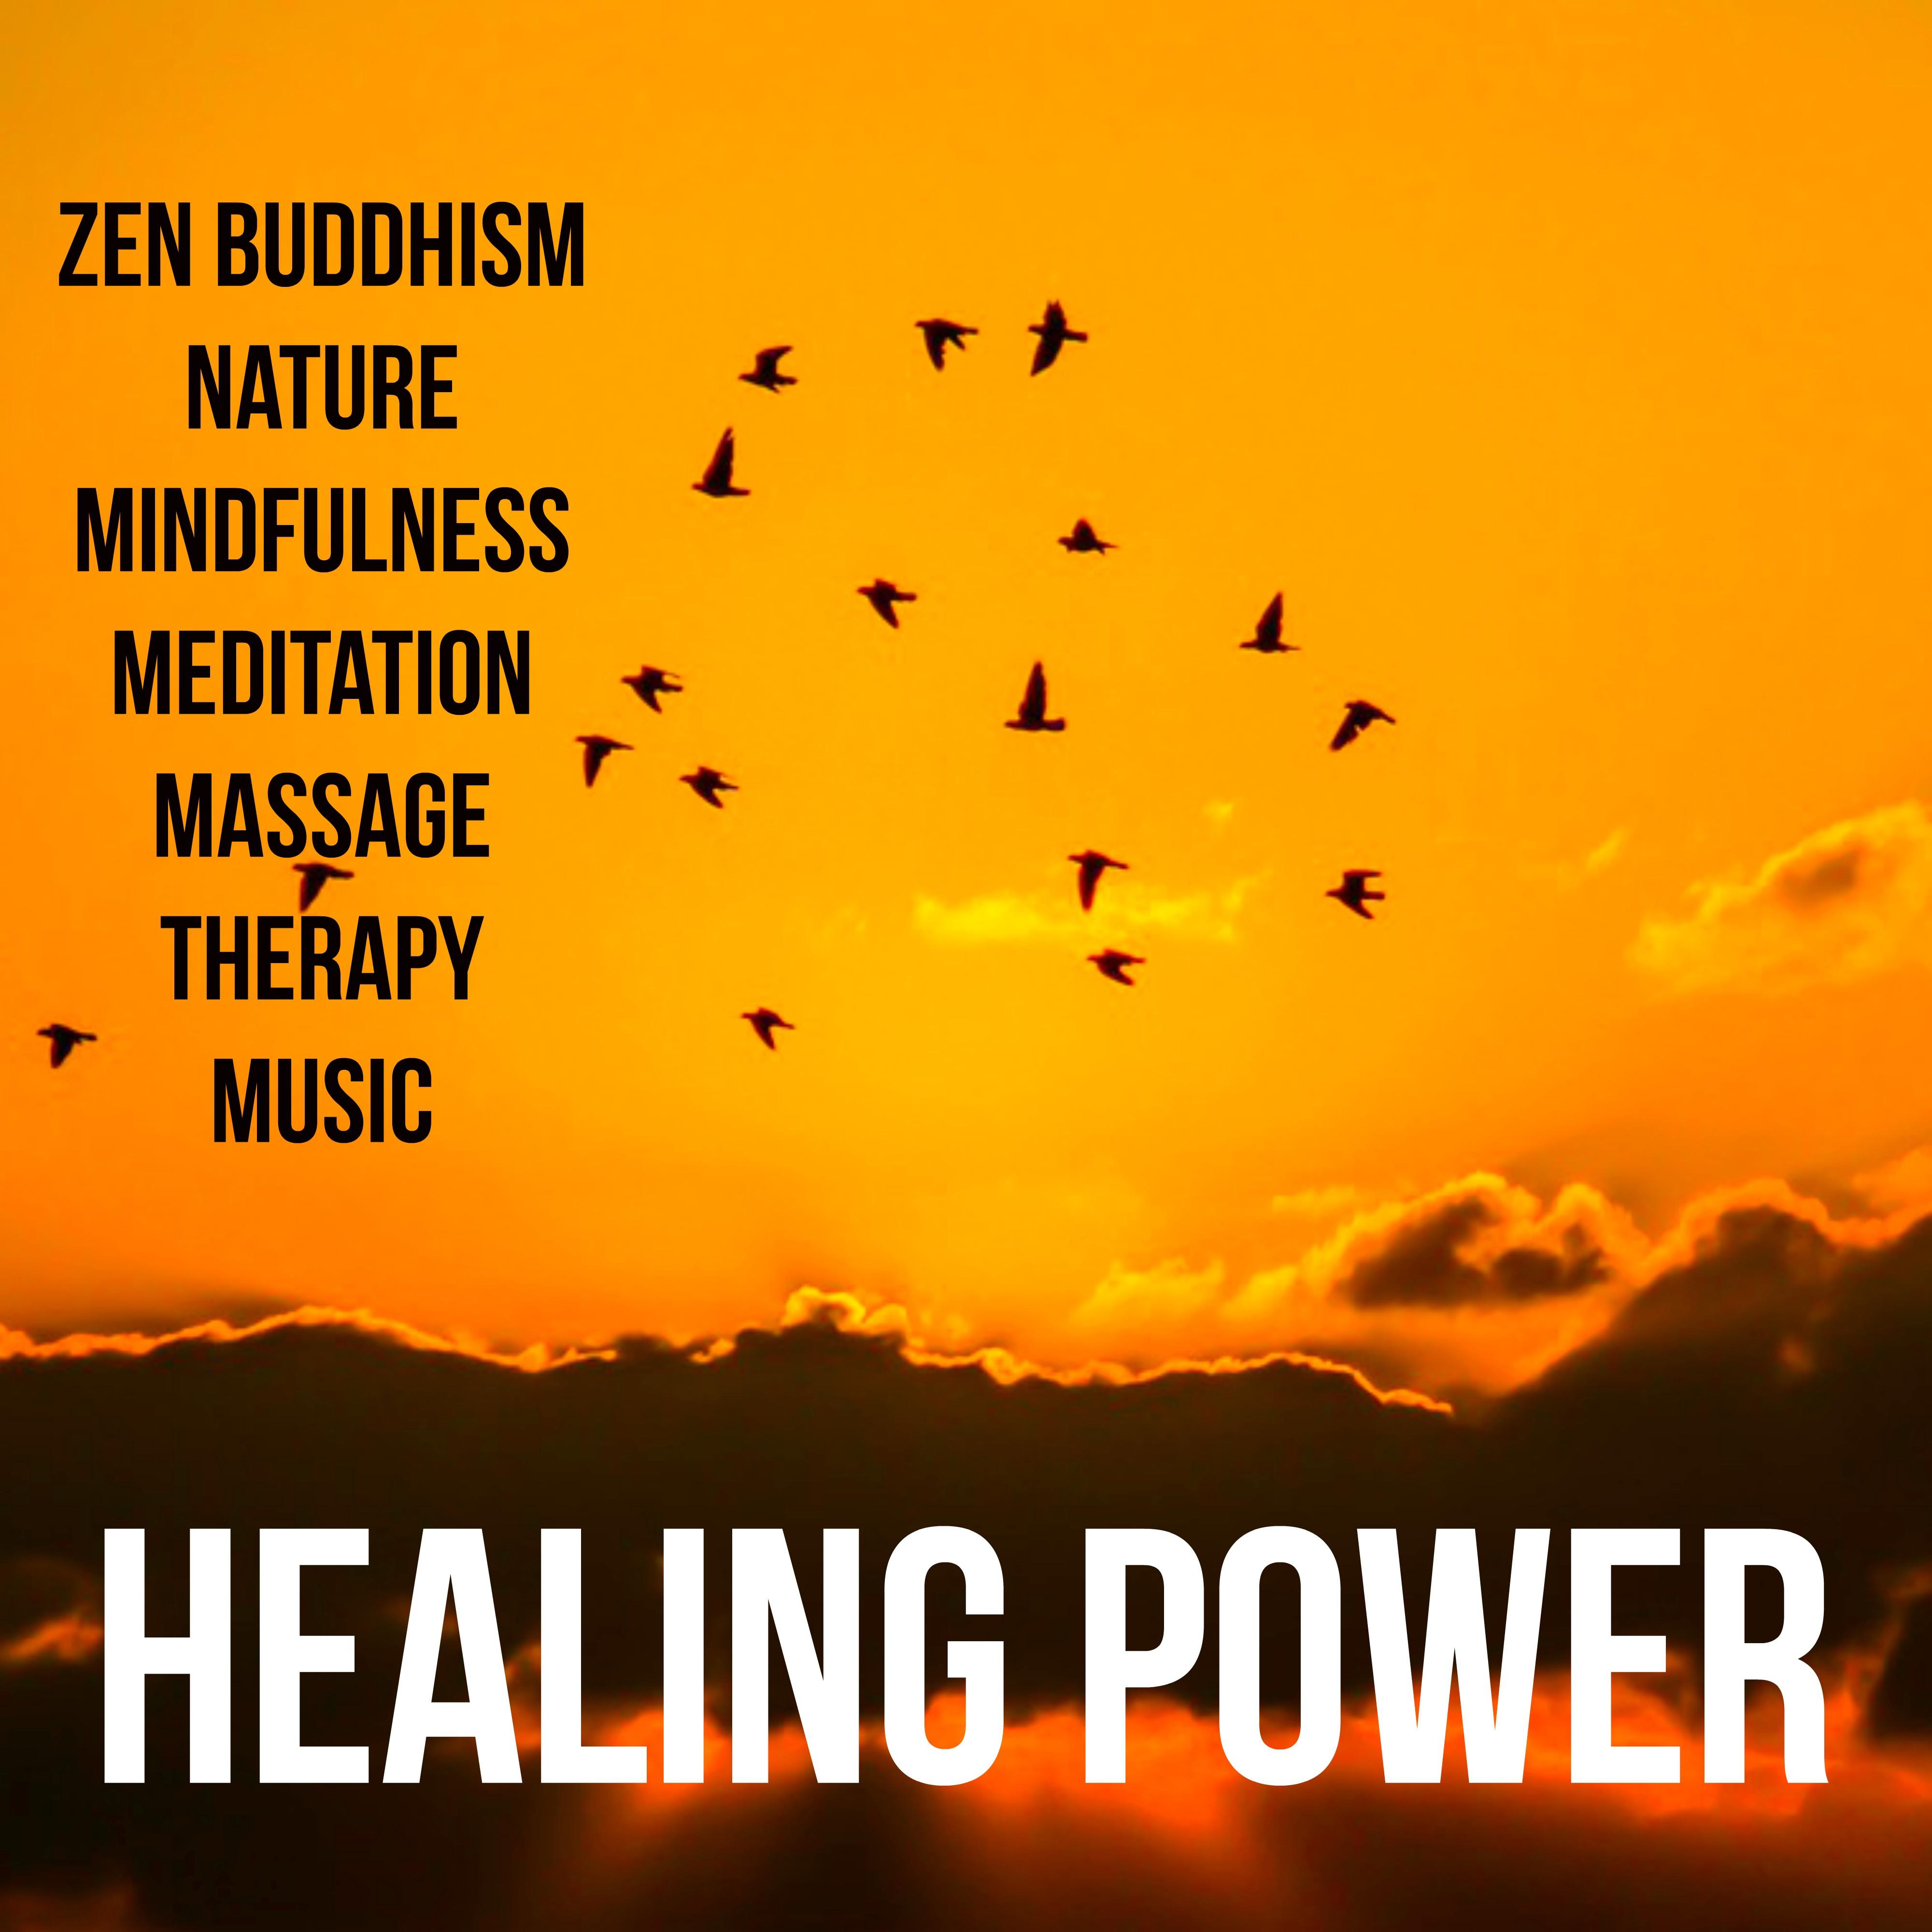 Healing Power - Zen Buddhism Nature Mindfulness Meditation Massage Therapy Music with Instrumental New Age Sounds